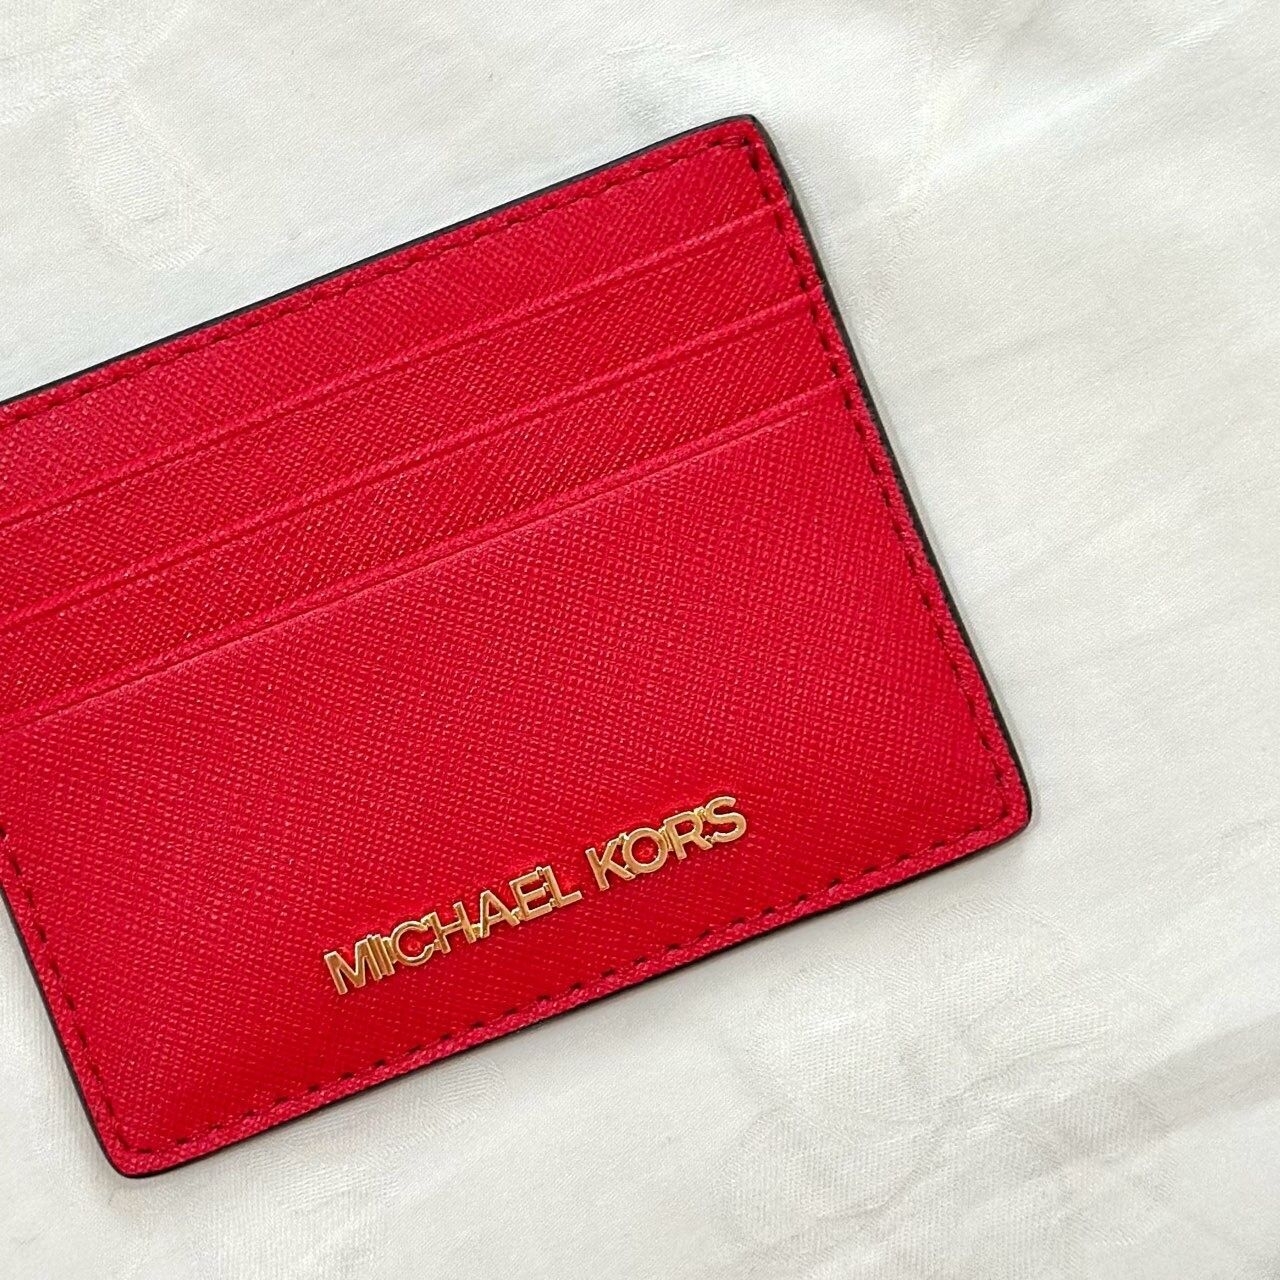 Michael Kors Red Wallet